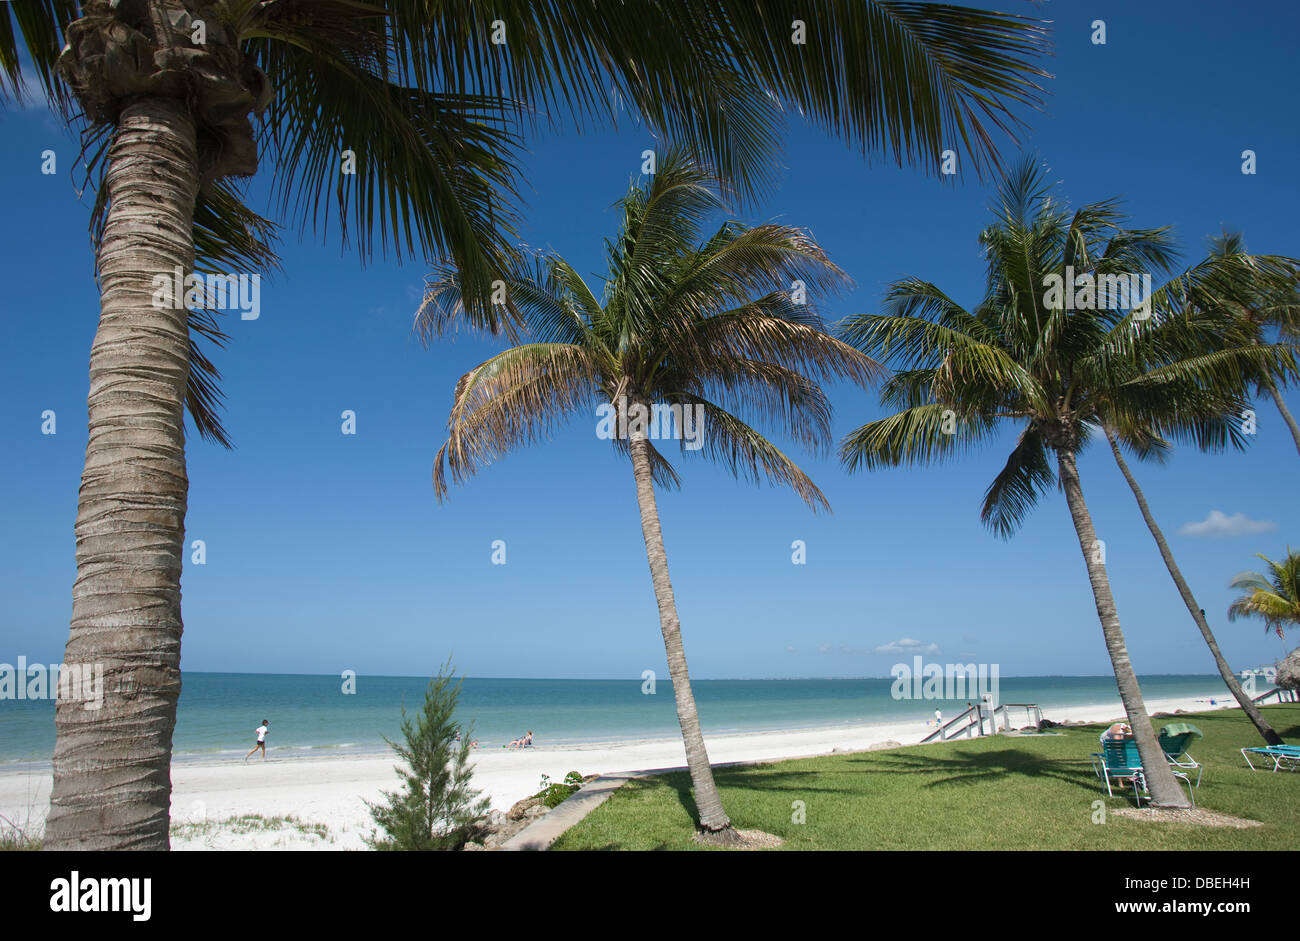 PALM TREES FORT MYERS BEACH ESTERO ISLAND GULF COAST FLORIDA USA Stock Photo